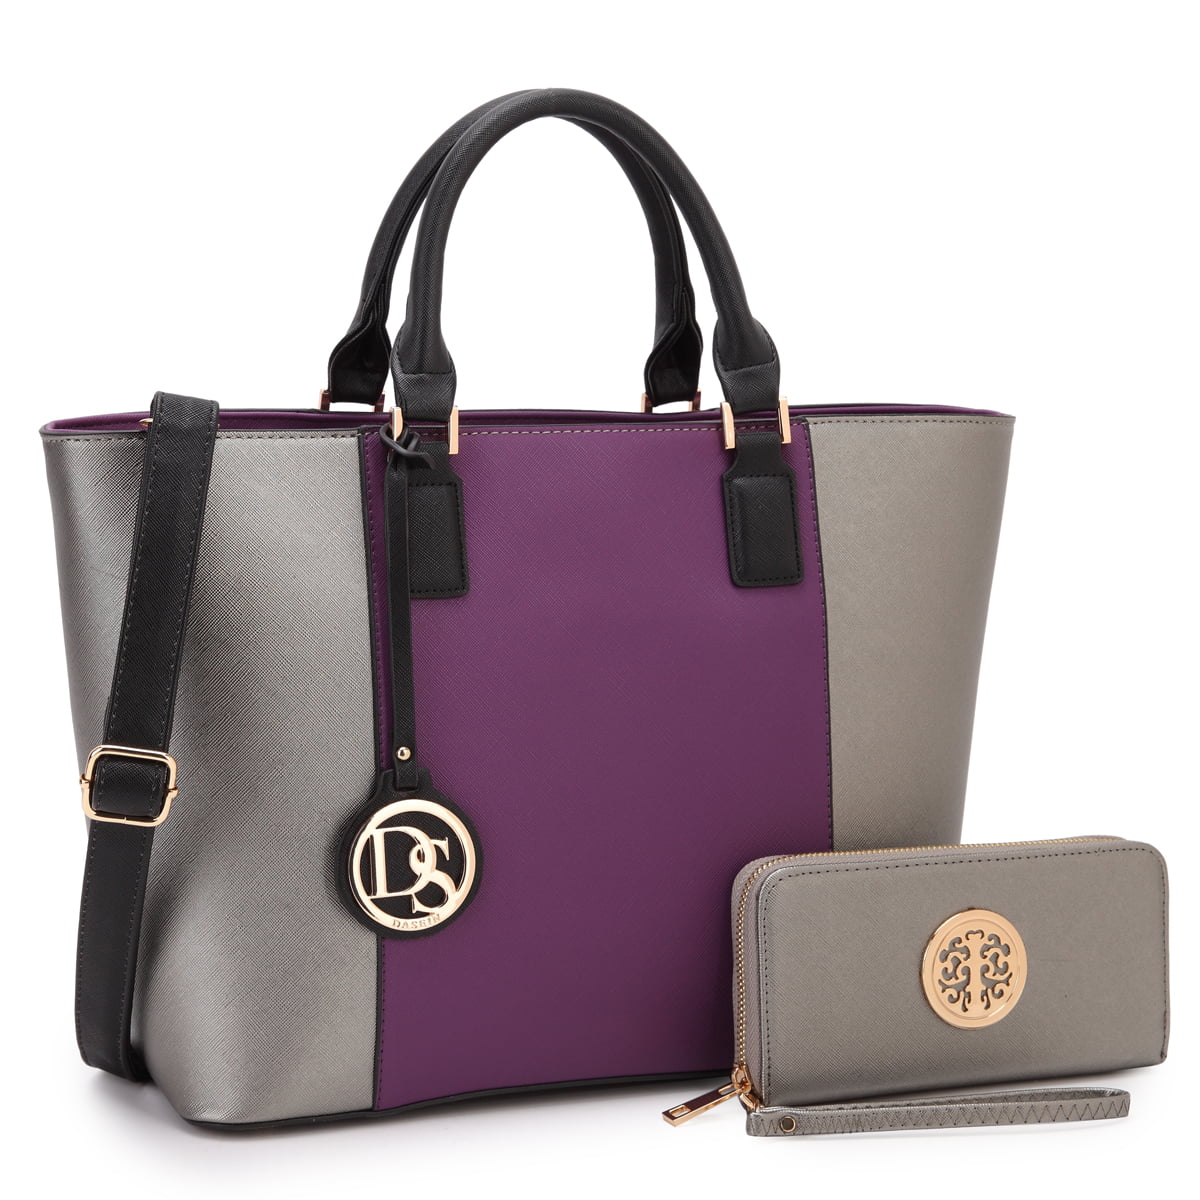 Dasein Women Handbags Purses Elegant Large Capacity Tote Shoulder Bag Top Handle Satchel Bag for ...